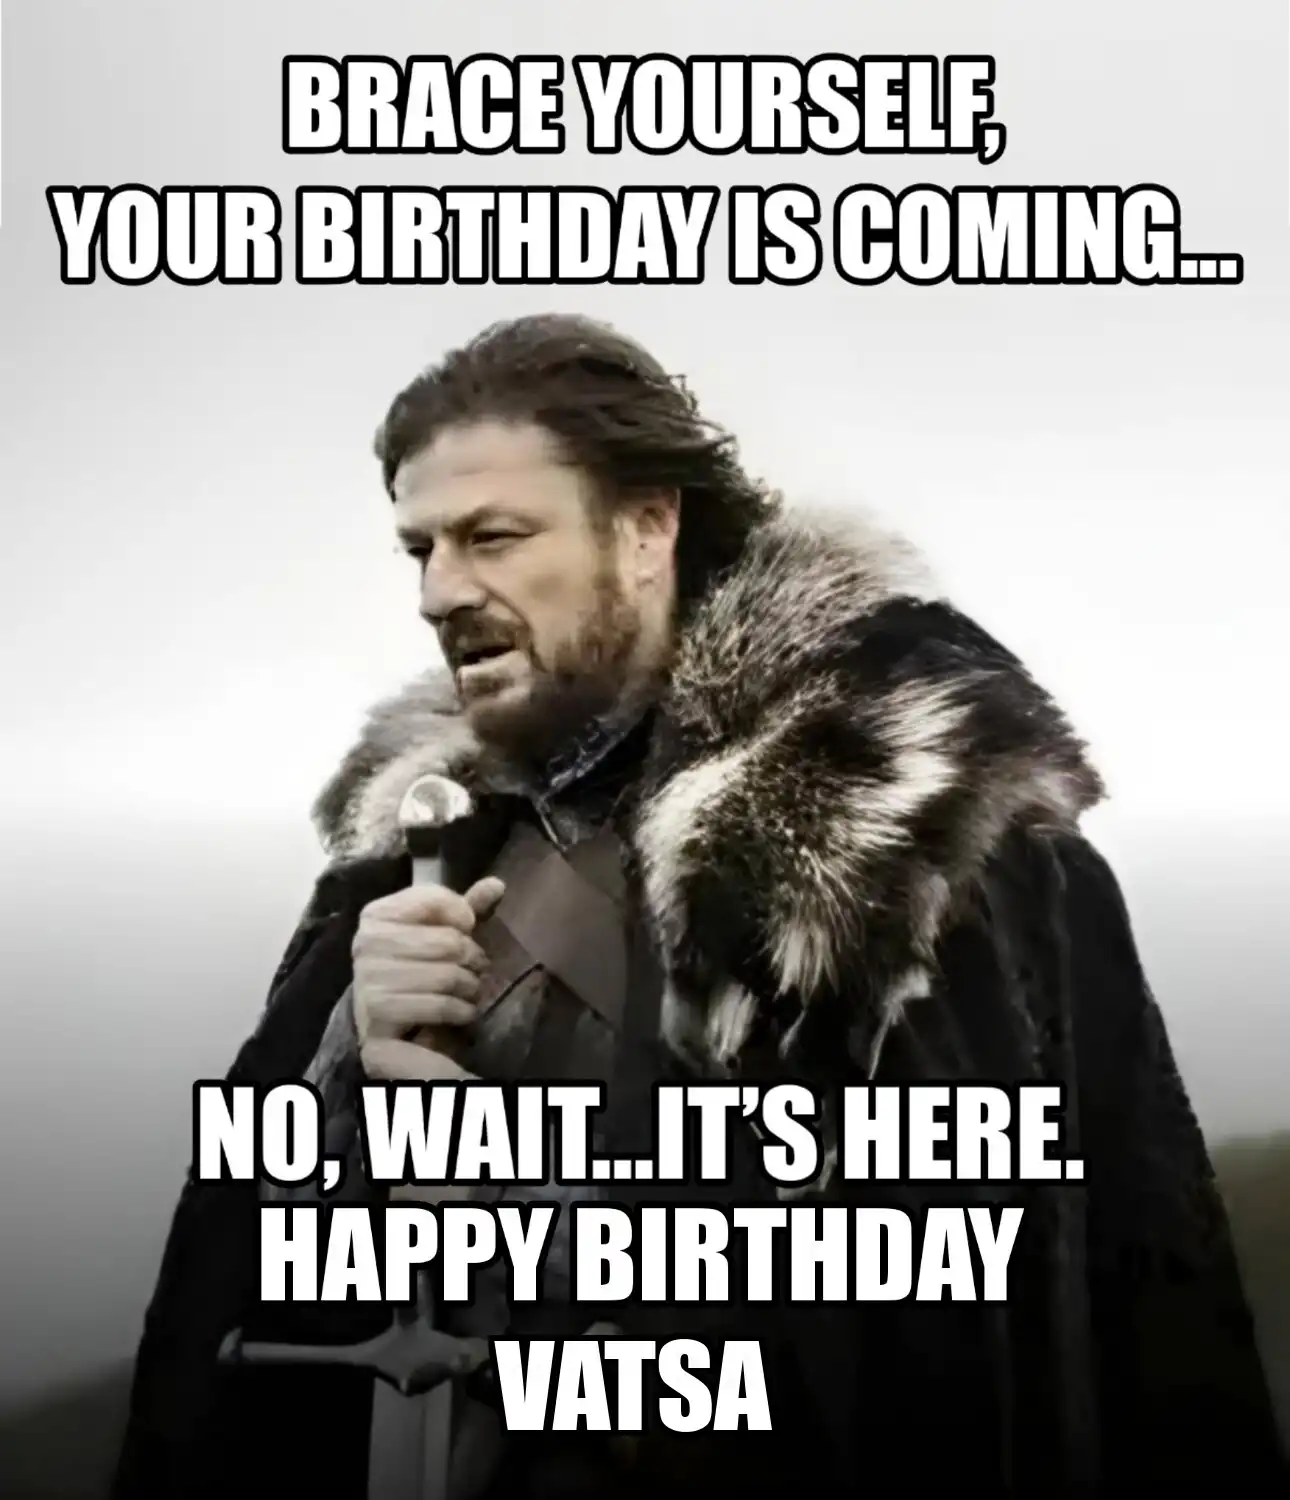 Happy Birthday Vatsa Brace Yourself Your Birthday Is Coming Meme